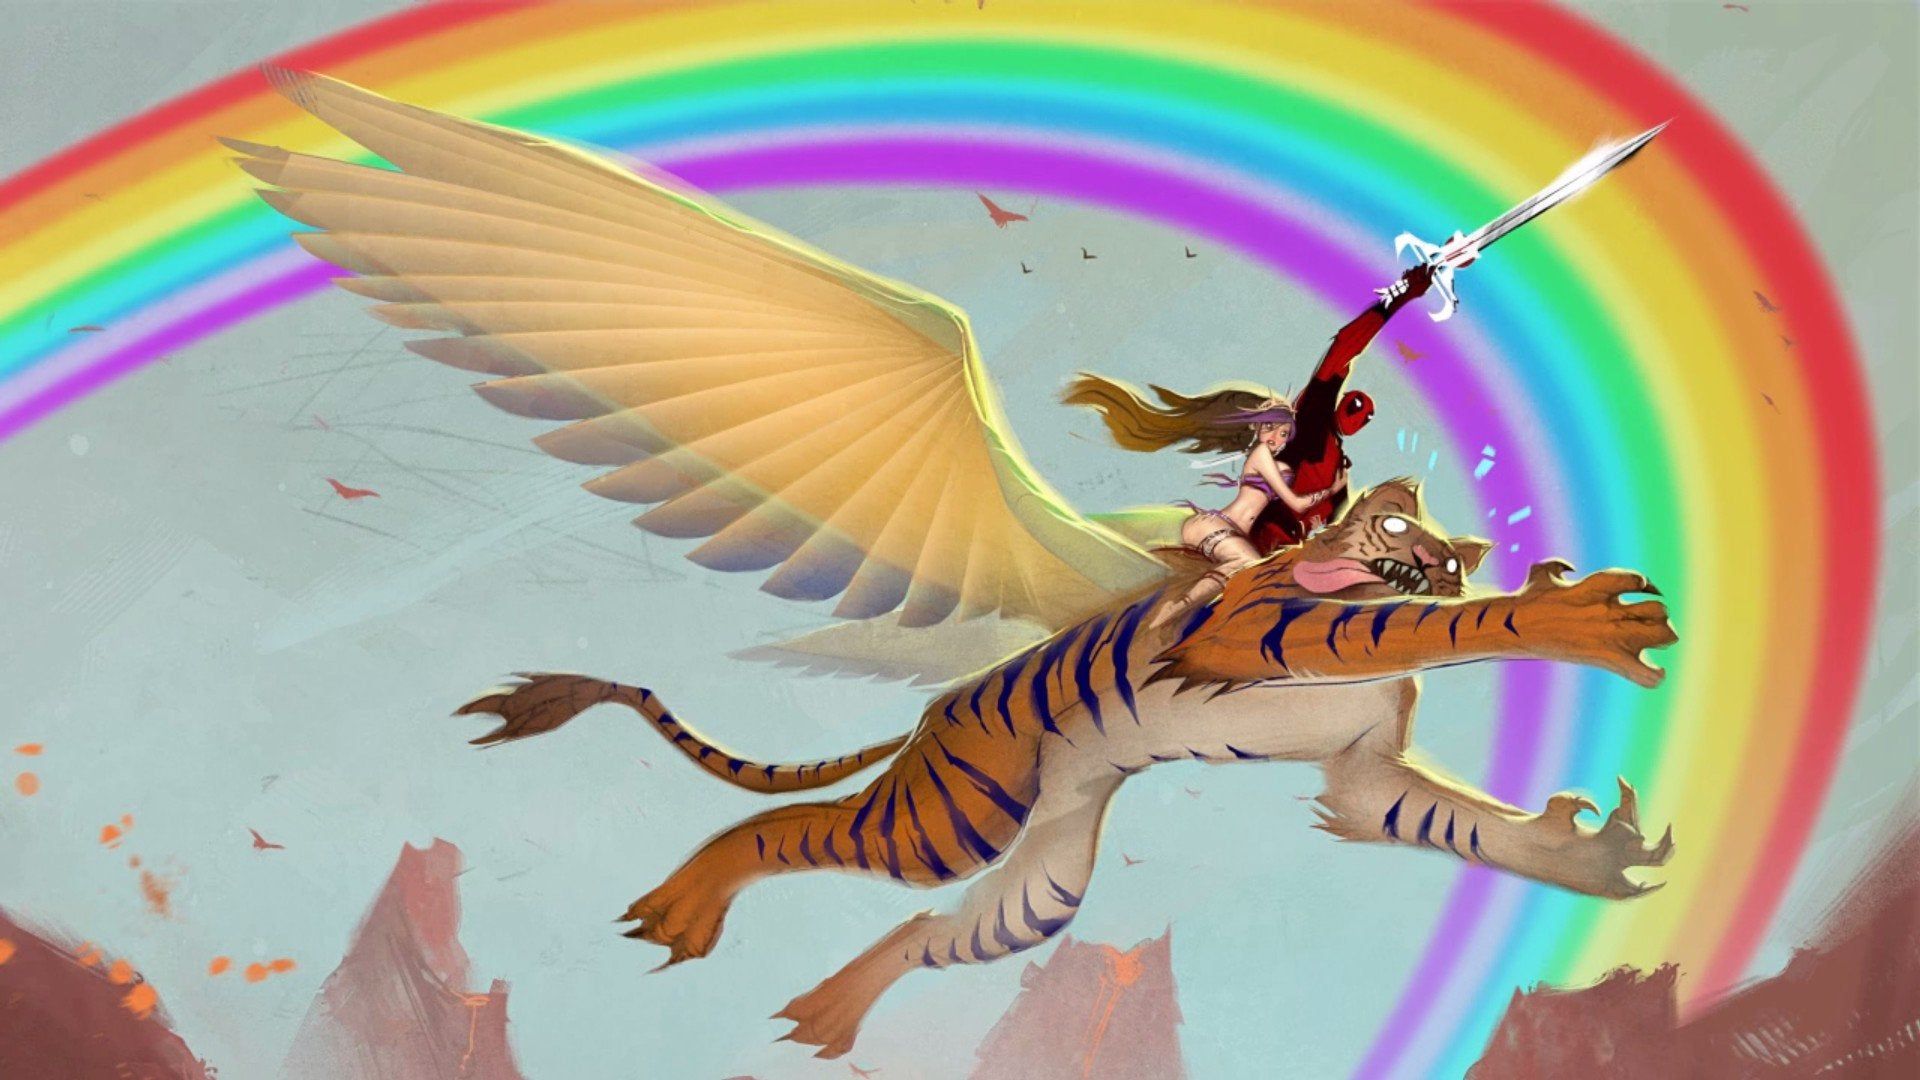 Deadpool riding a flying tiger. [1920x1080]